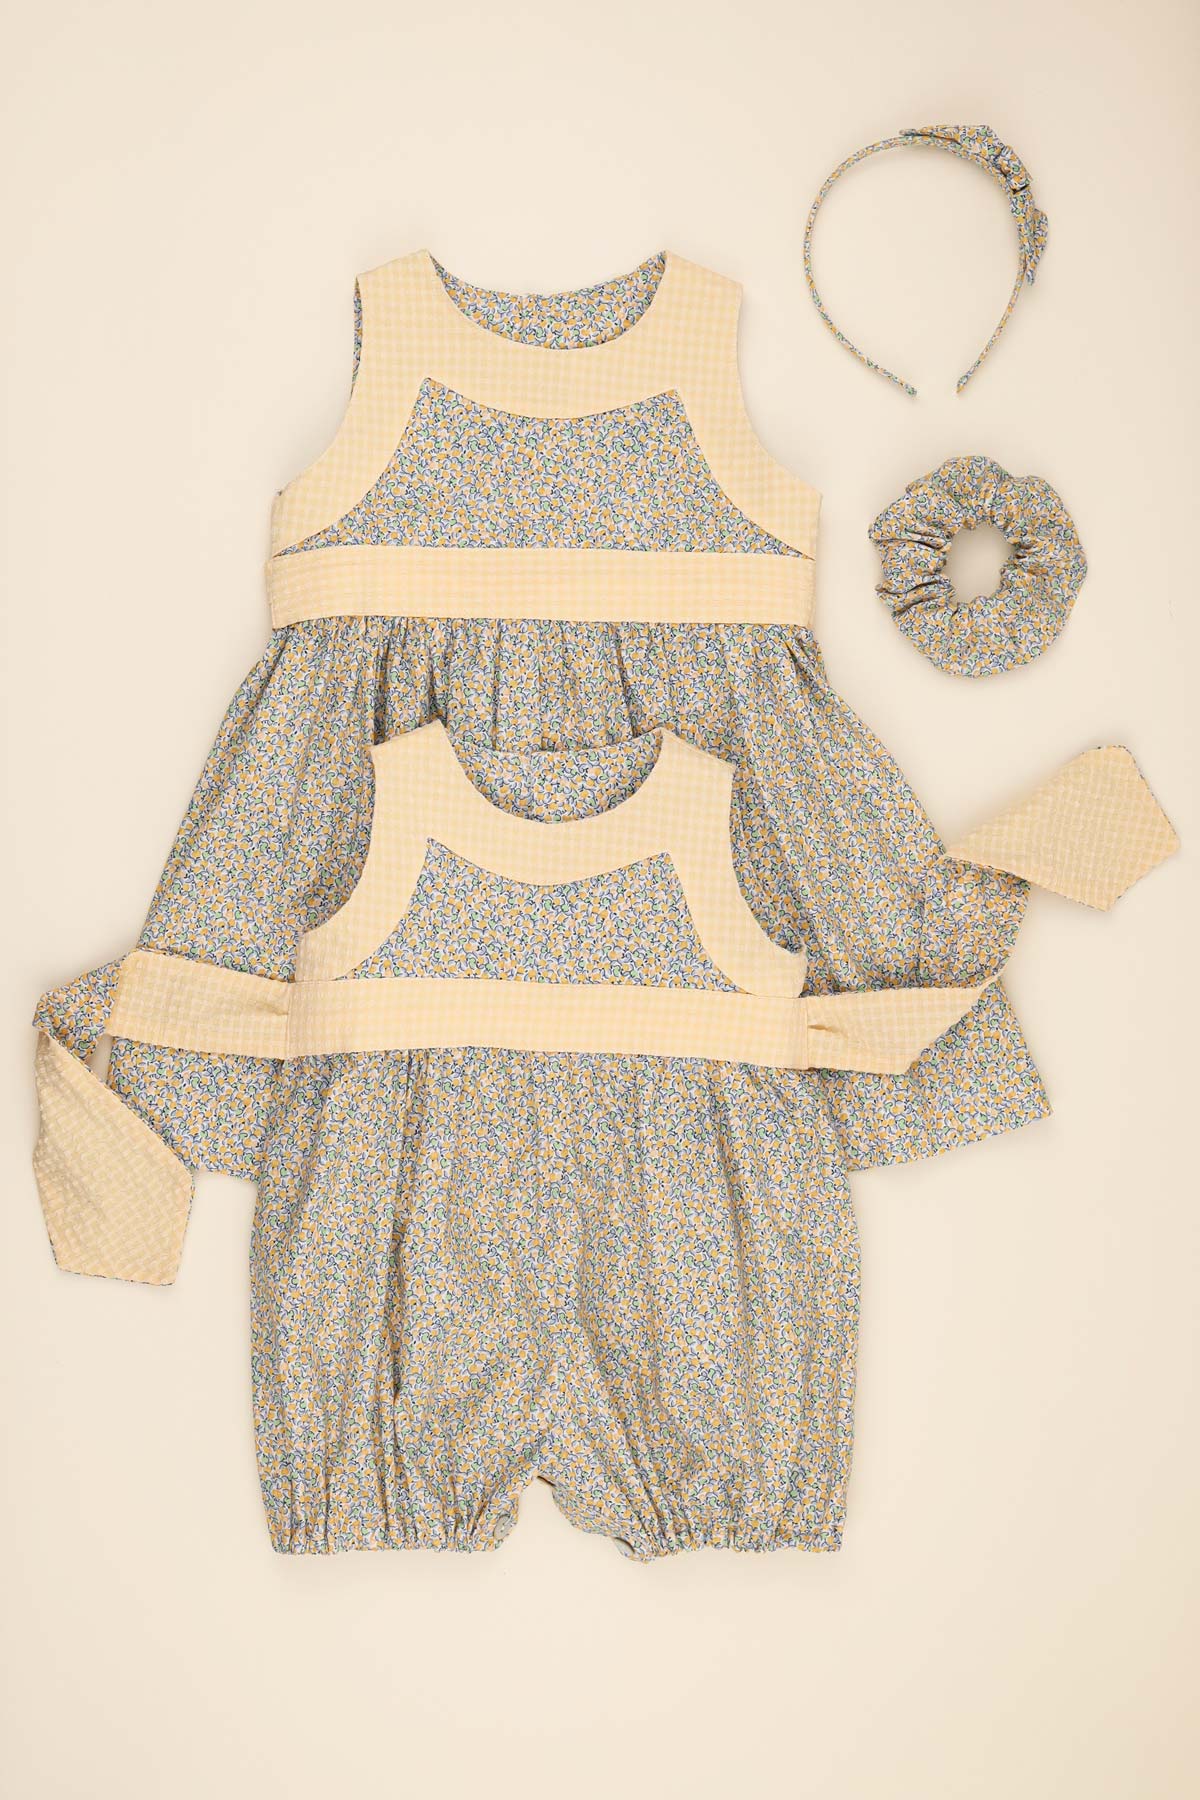 lemon ditsy print baby girl romper and matching dress